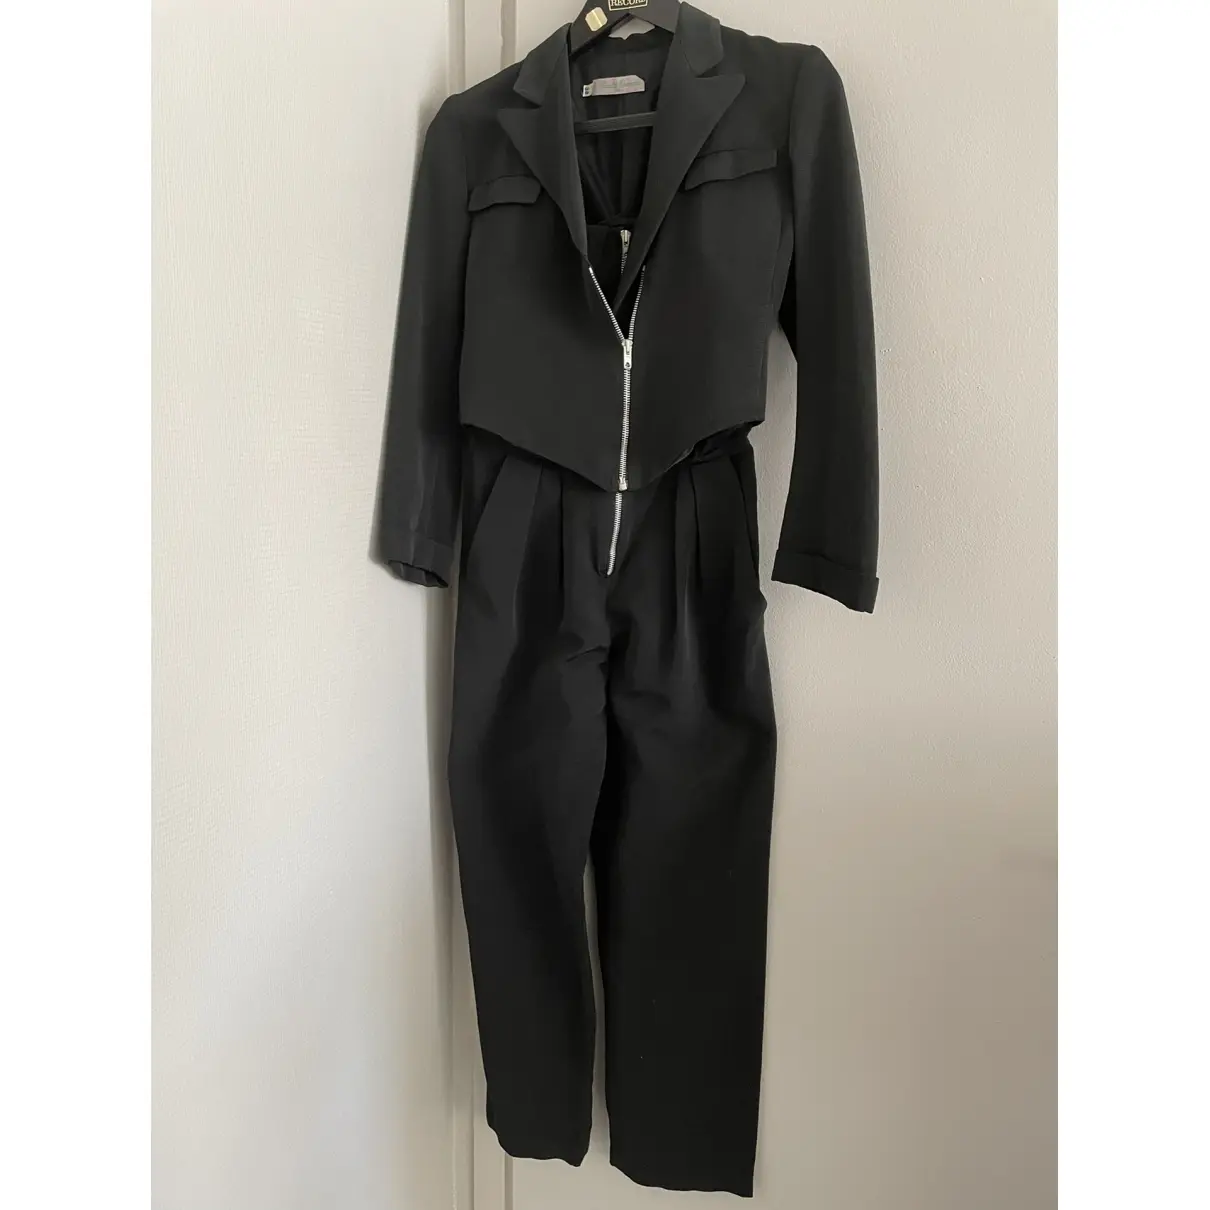 Buy Chantal Thomass Suit jacket online